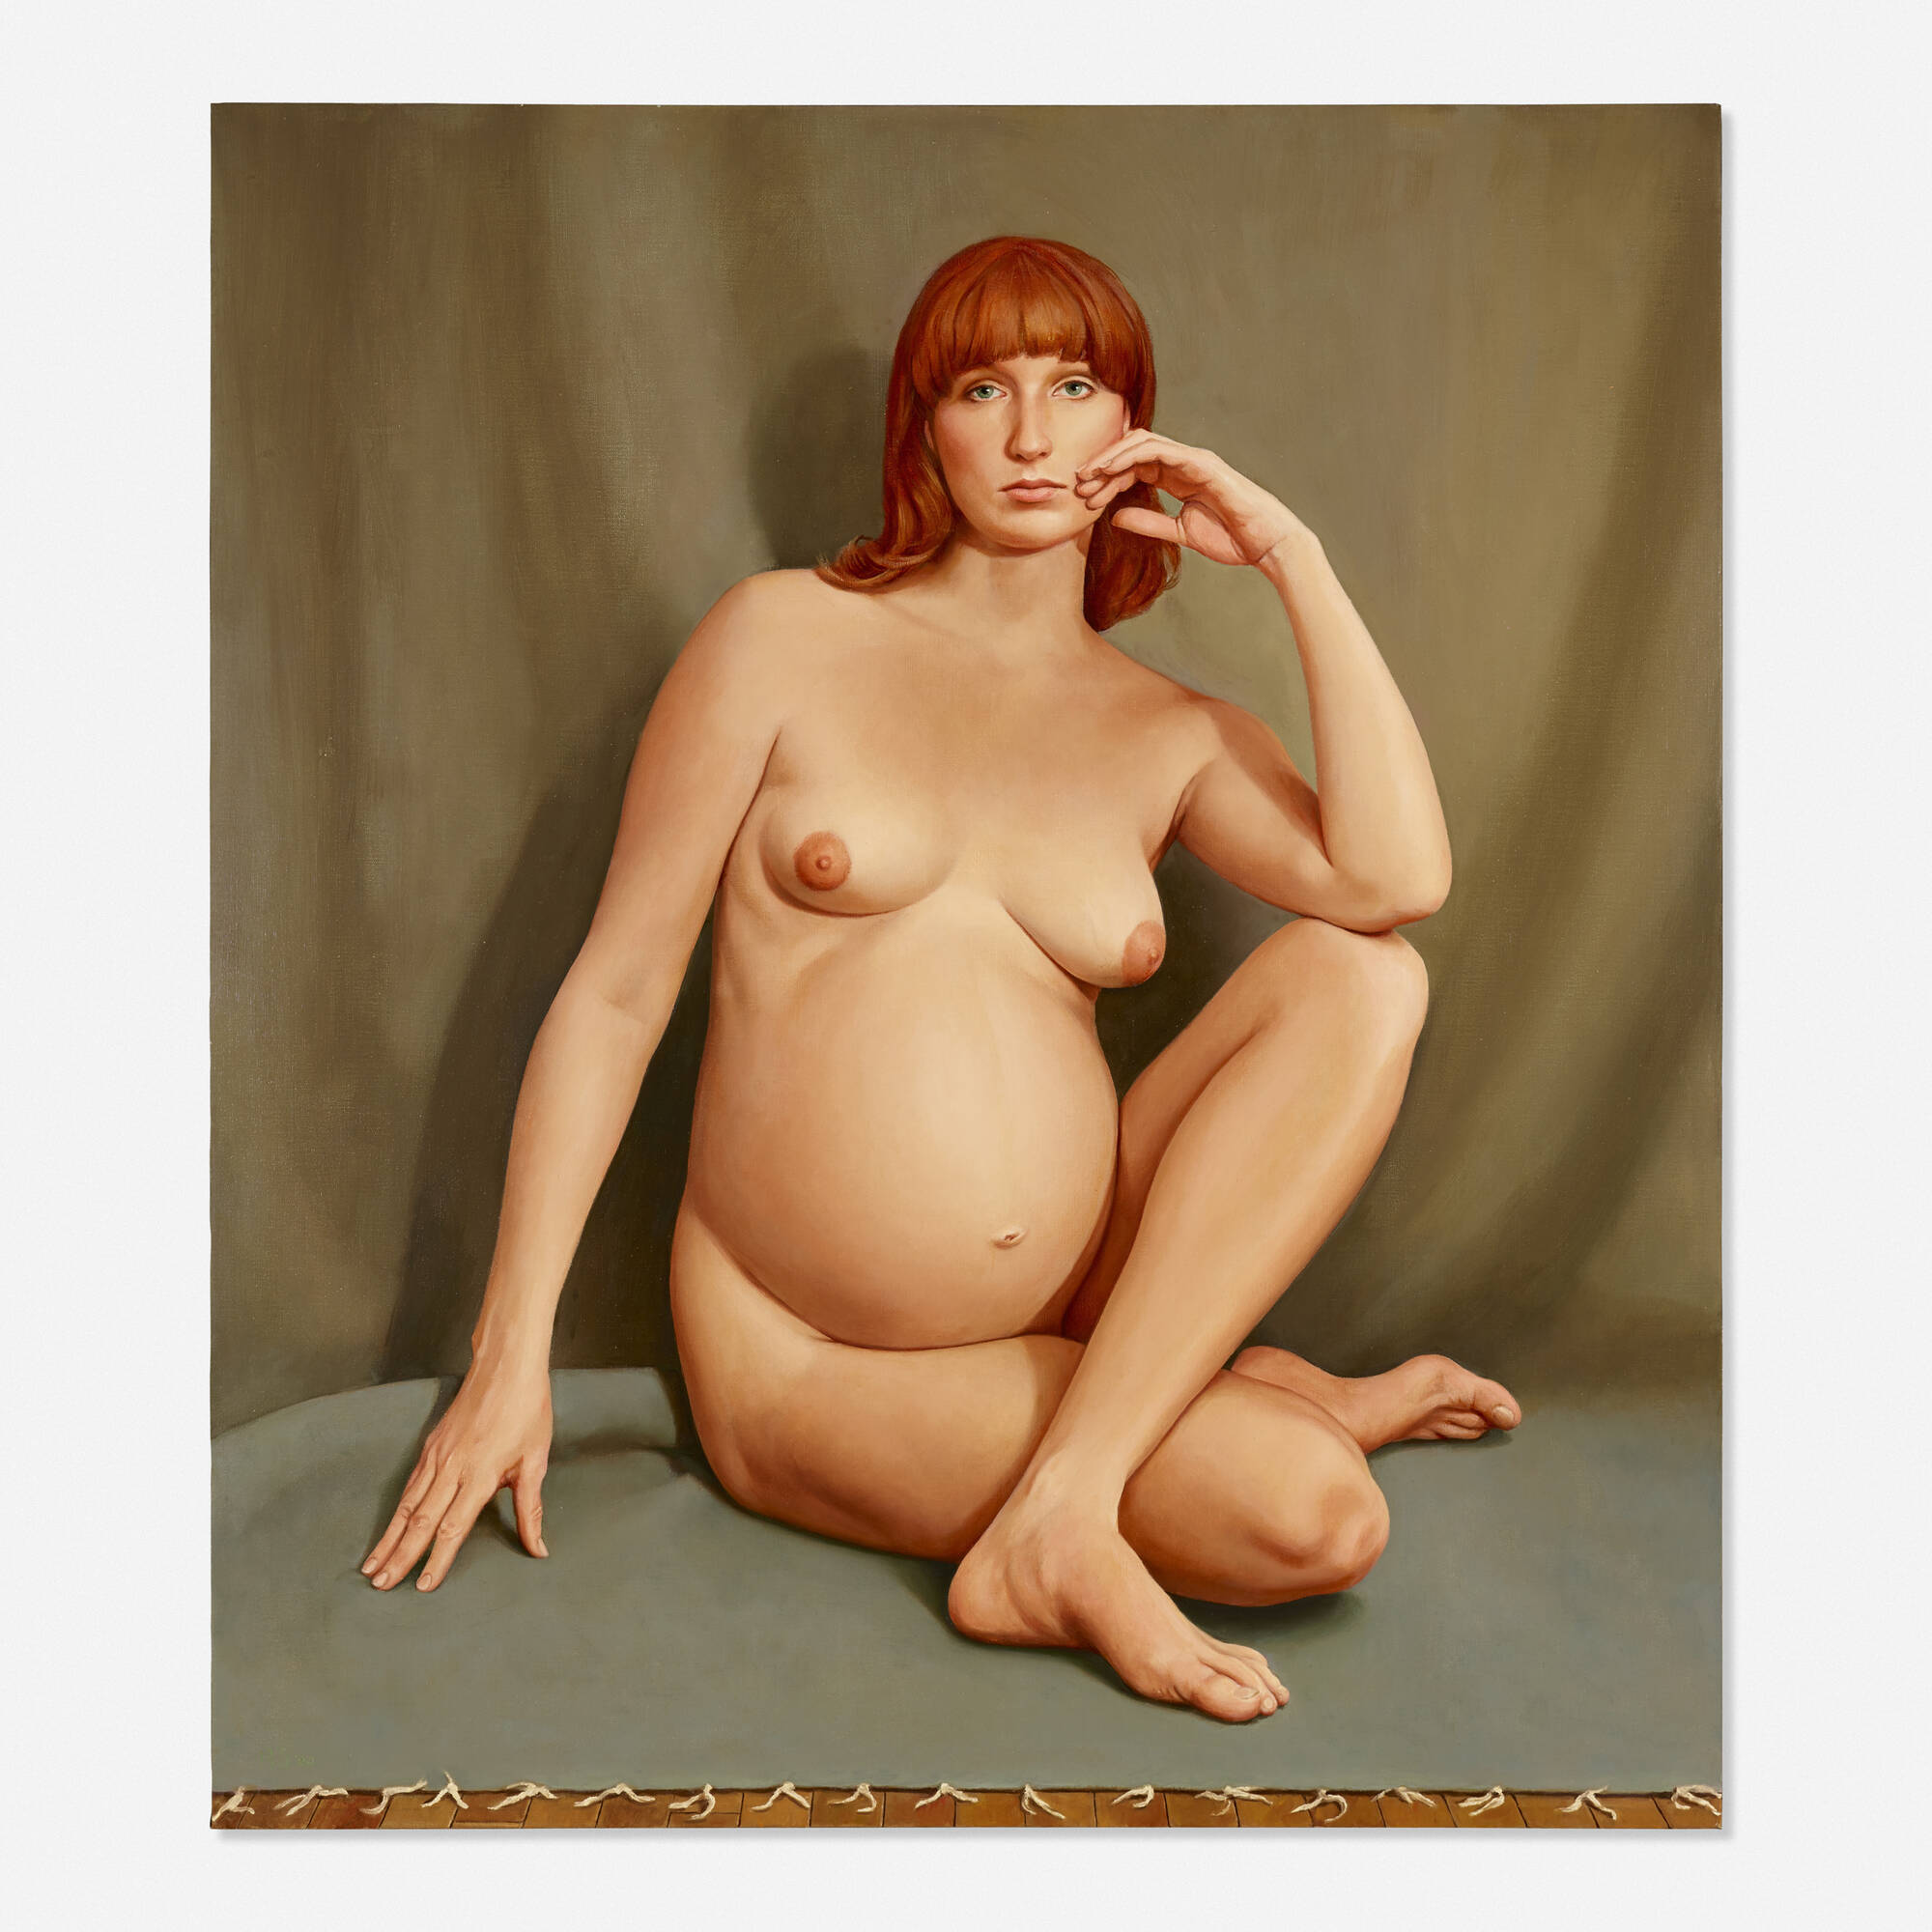 photos of pregnant nudist